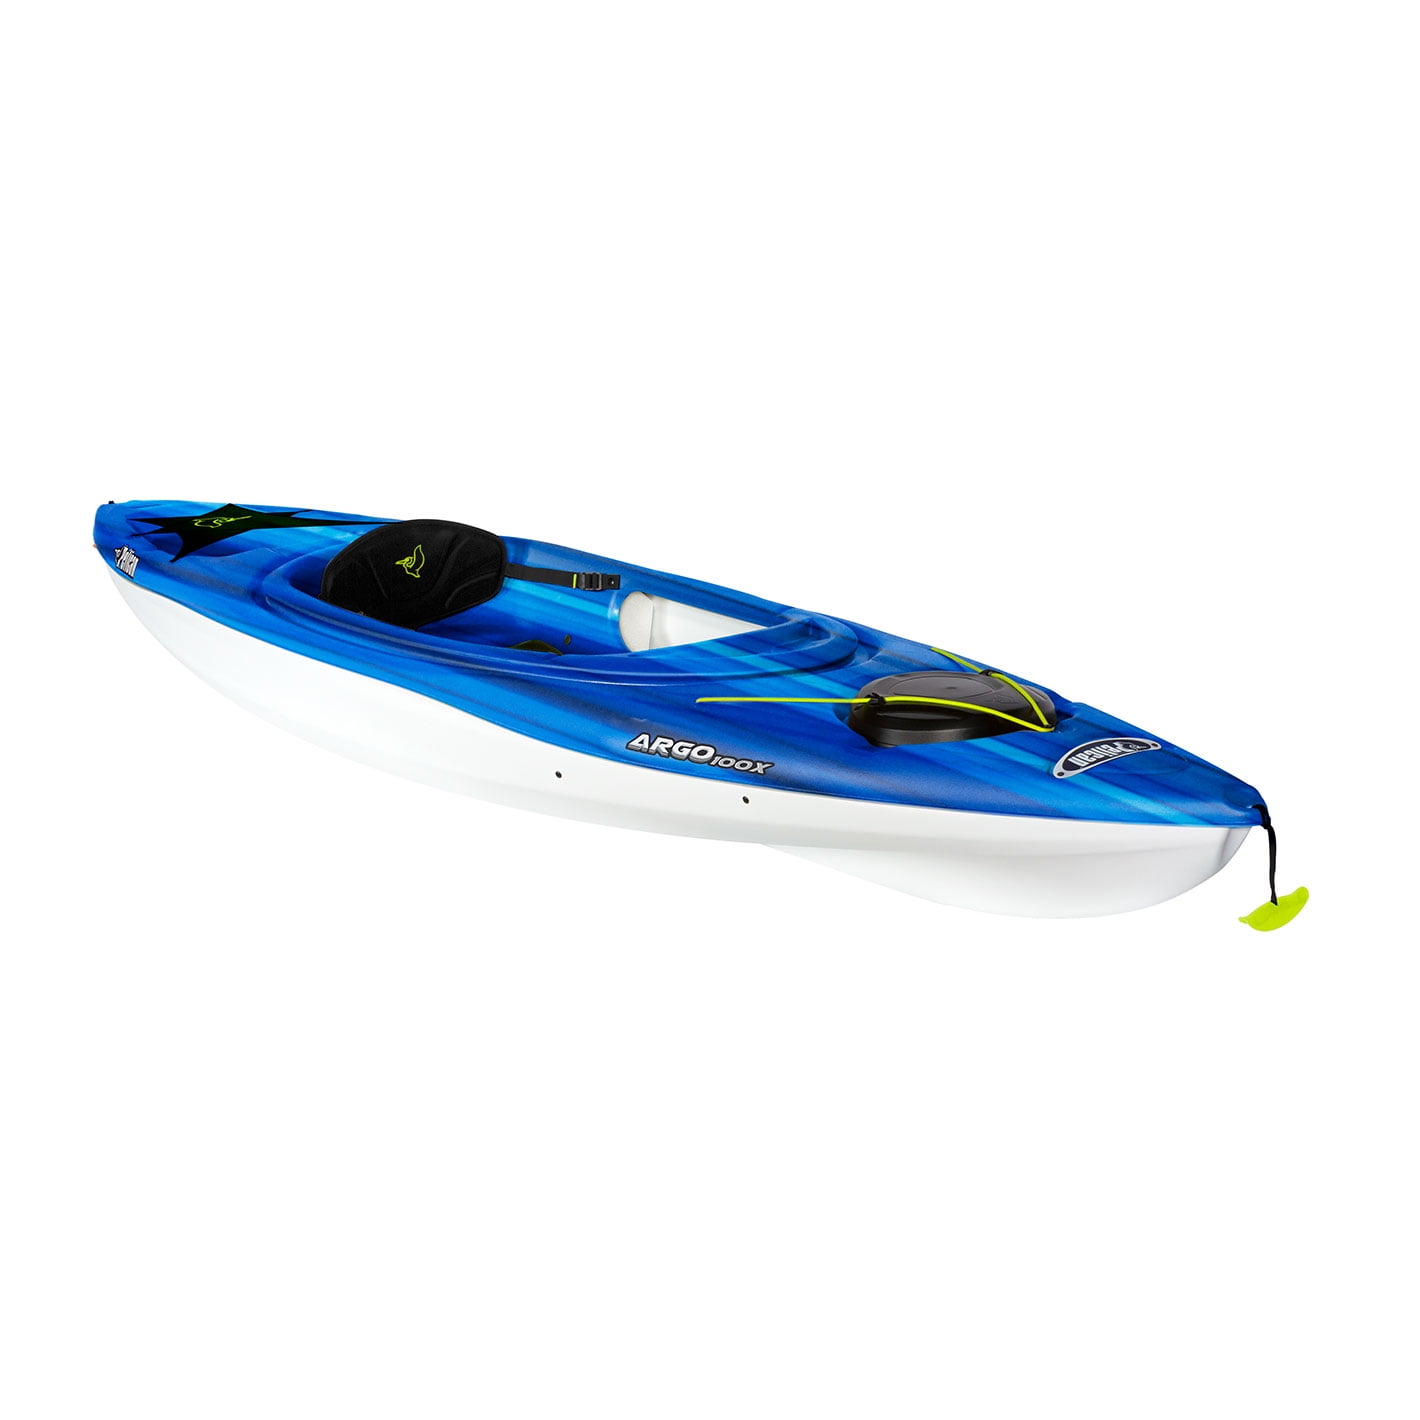 Pelican - Argo 100x - Sit-In Kayak - Lightweight One Person Kayak - 10 ft - Blue